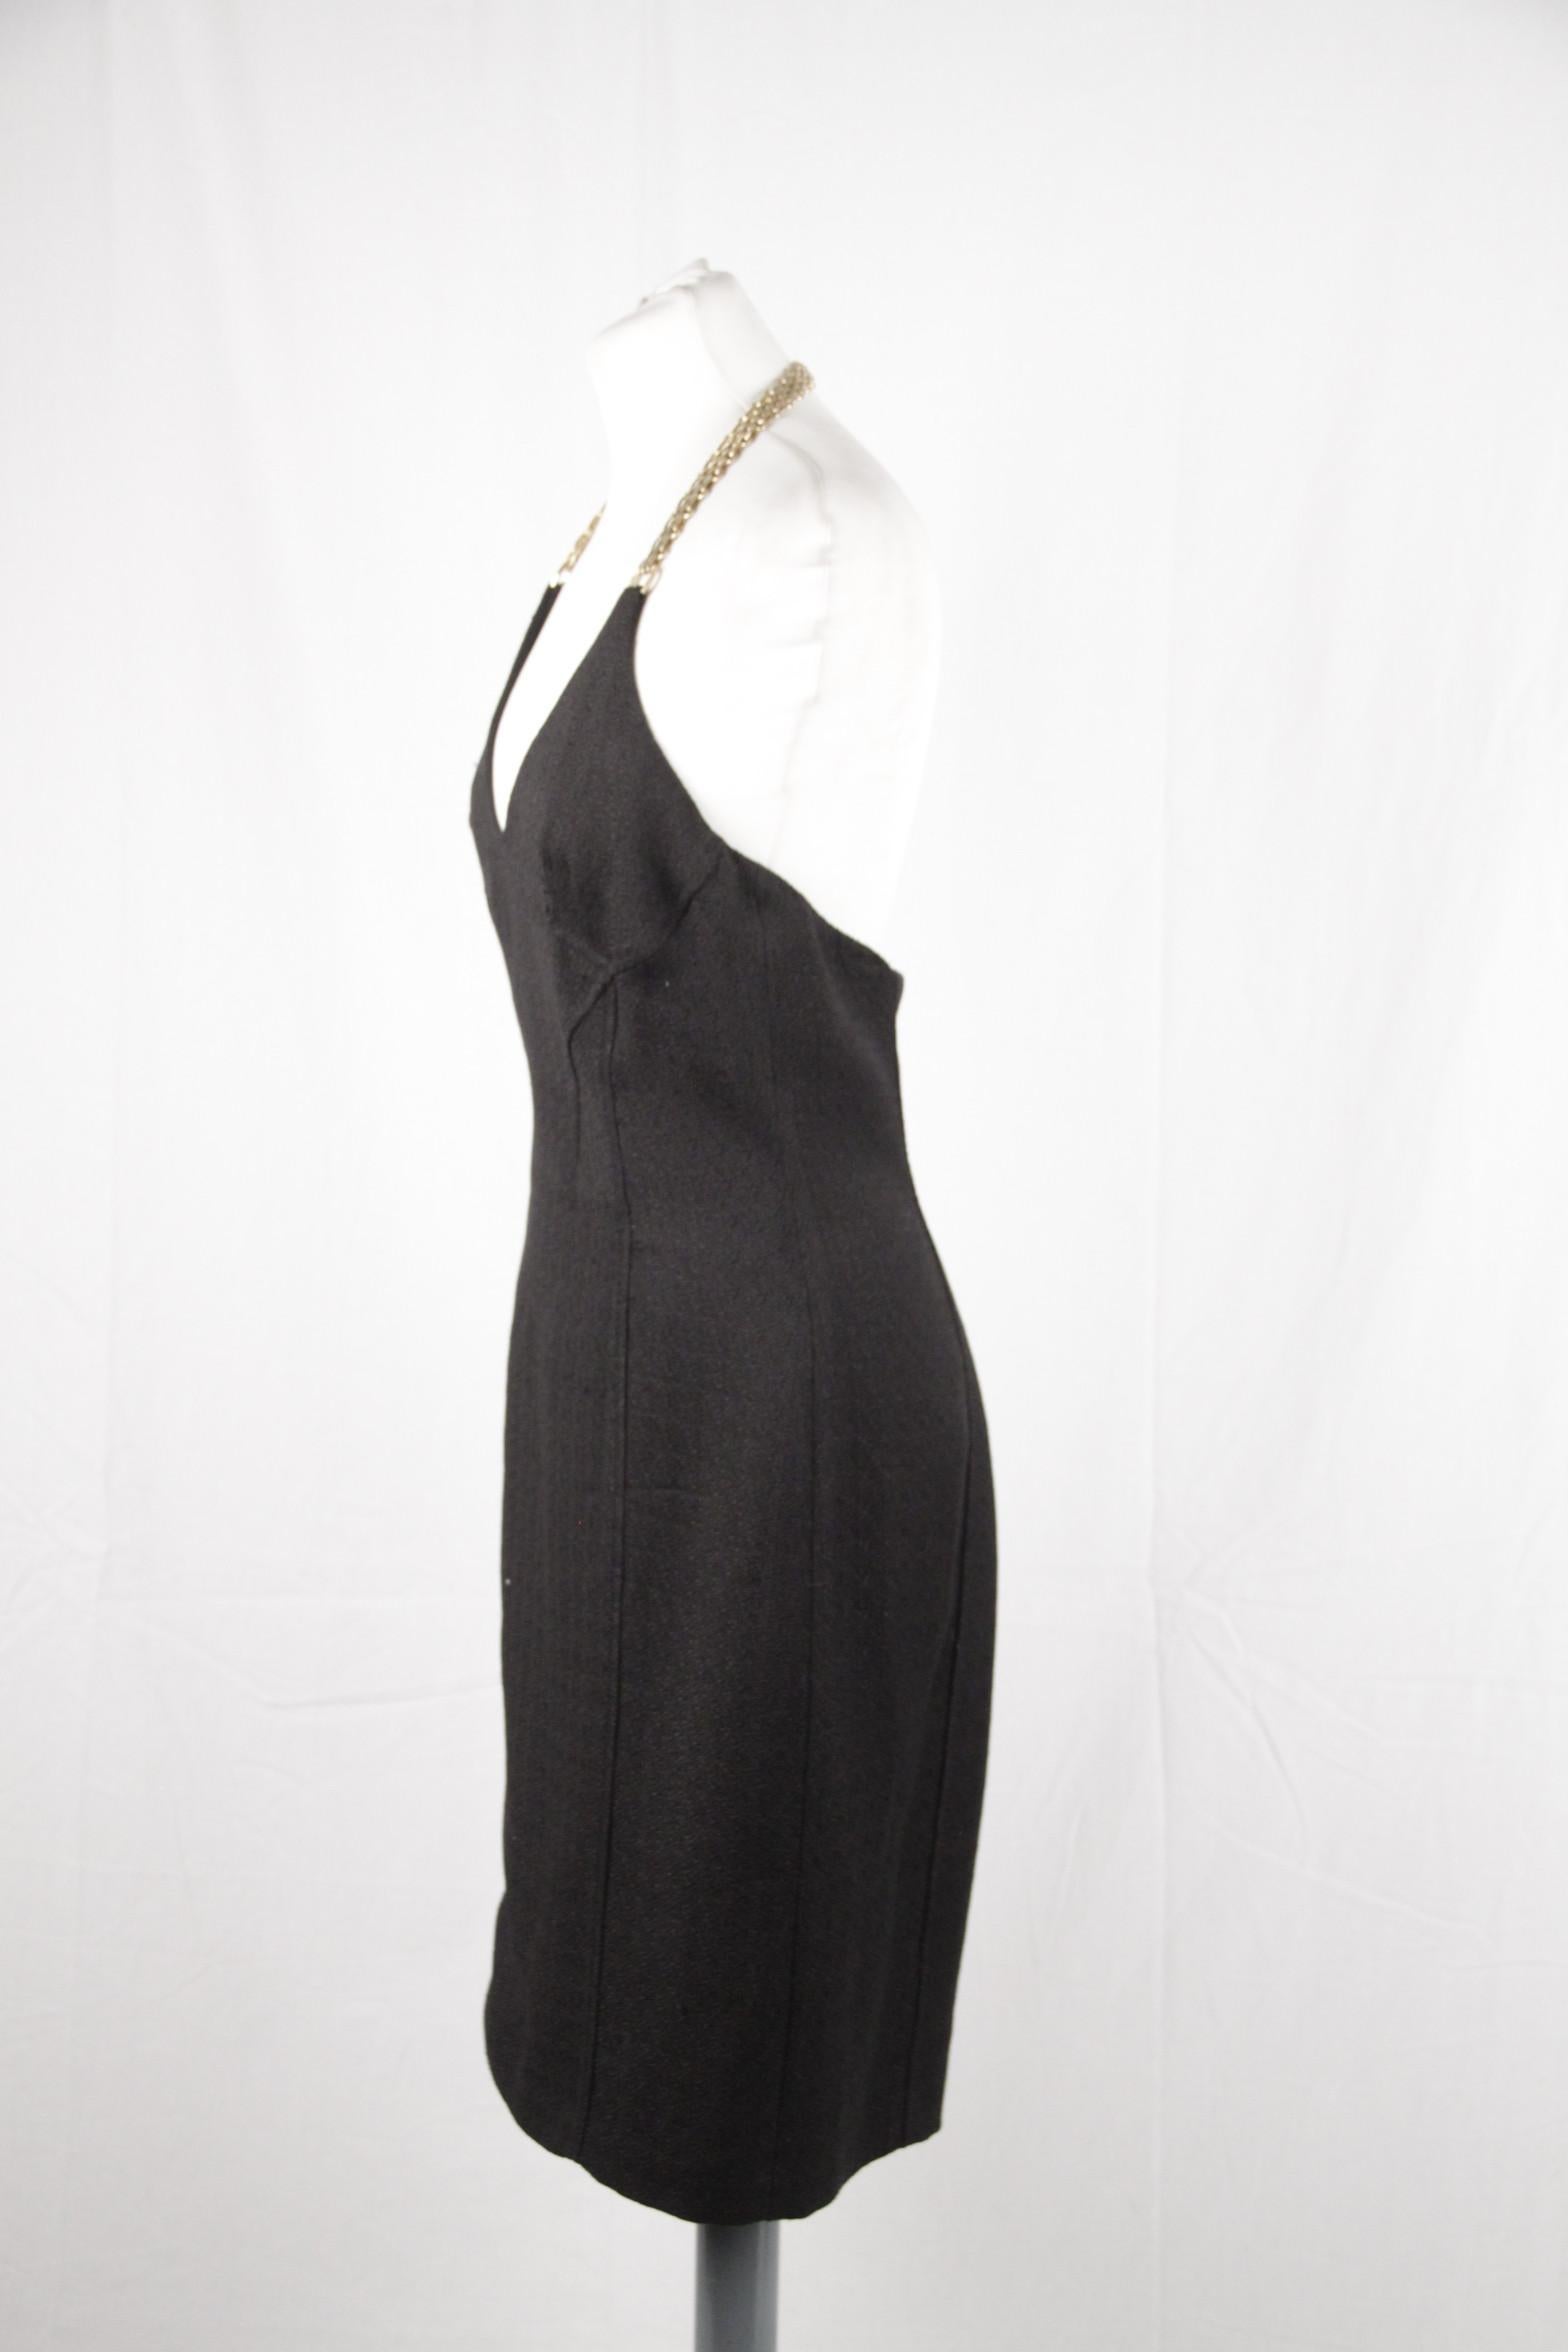 Versace Black Cotton Blend Halterneck dress with chain Strap Size 42 2